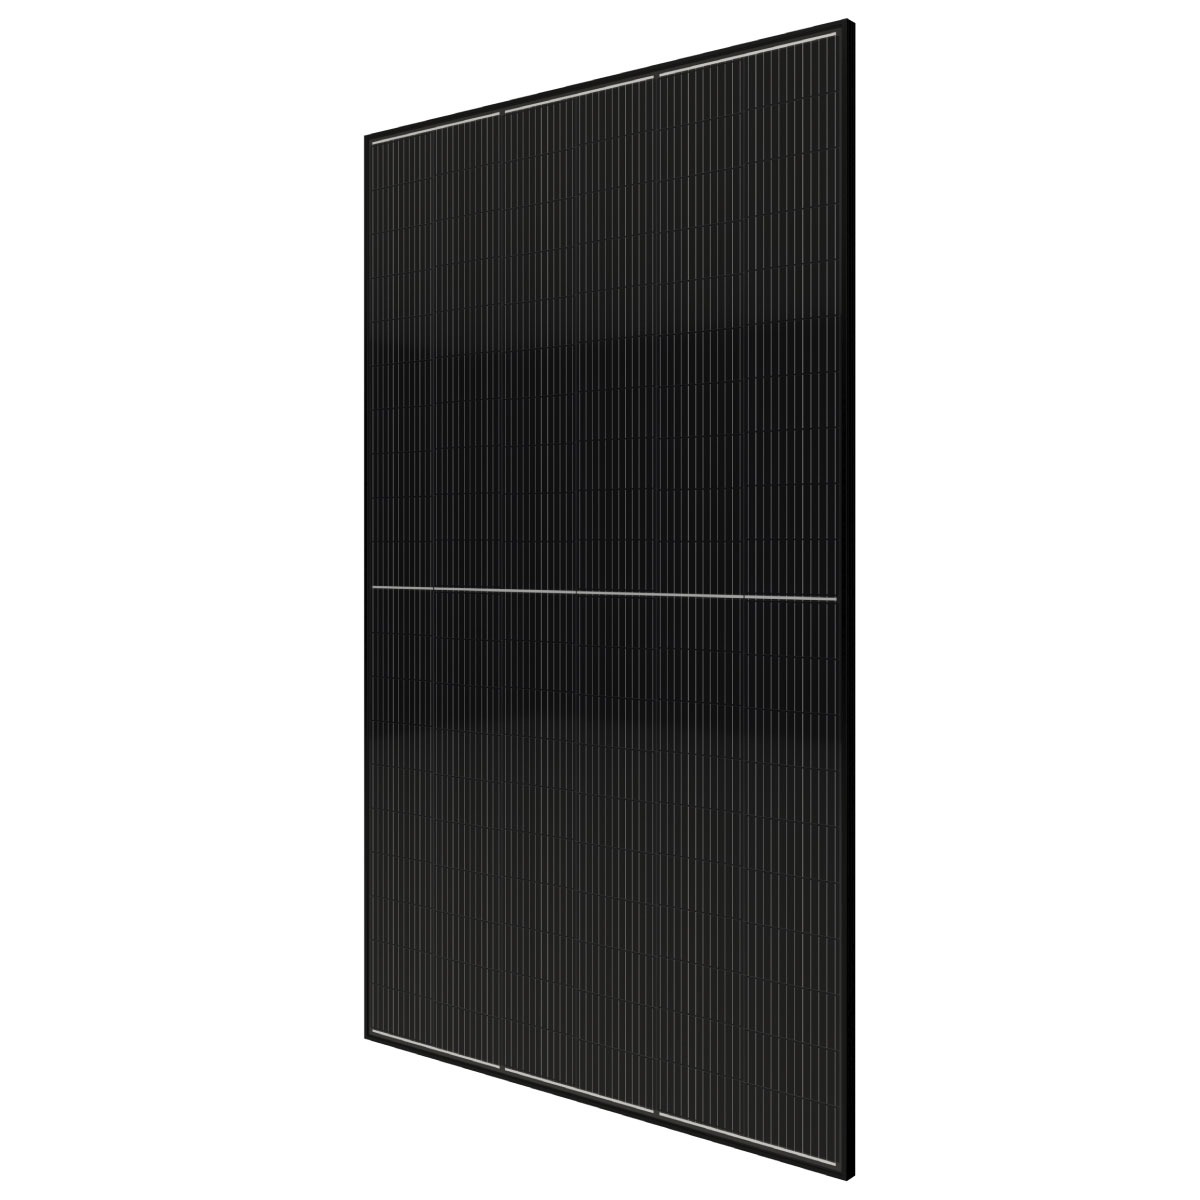 TommaTech 600Wp 120PM M12 Full Black Solar Panel